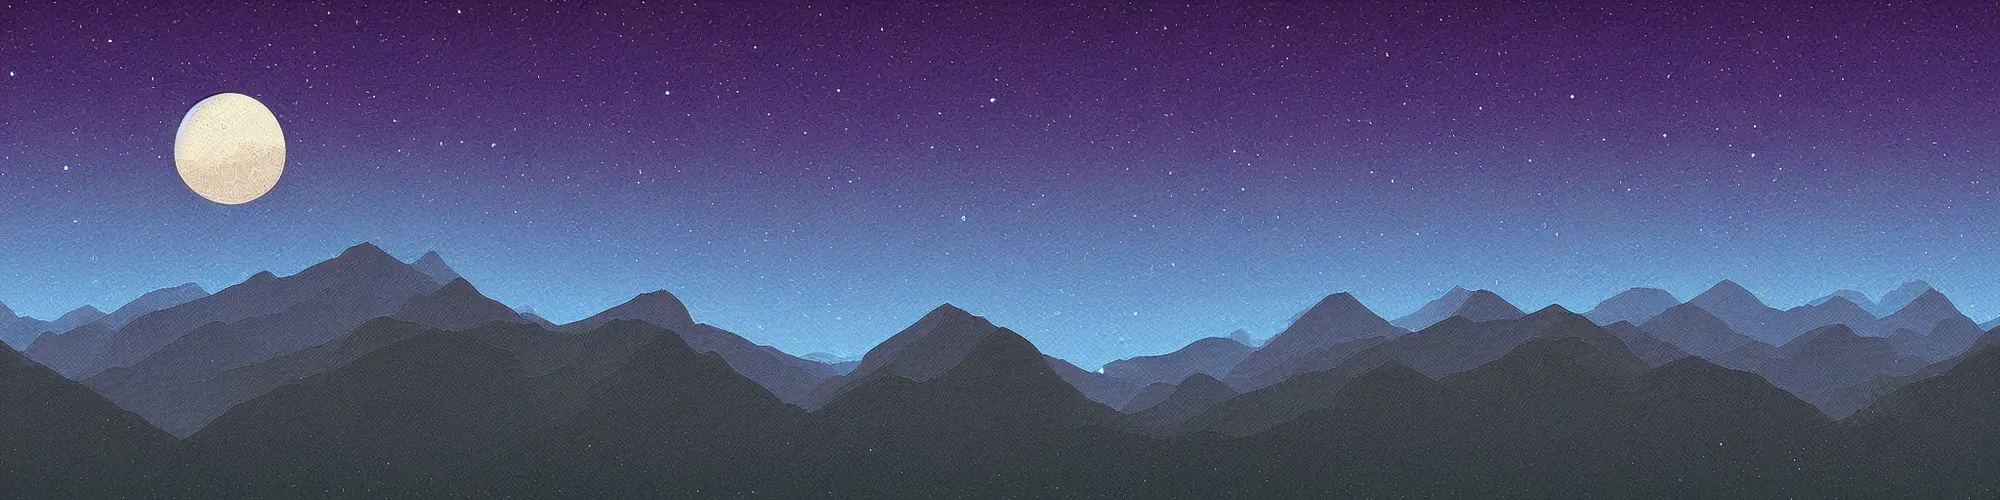 Prompt: mountains, night sky, pixel art, parallax effect